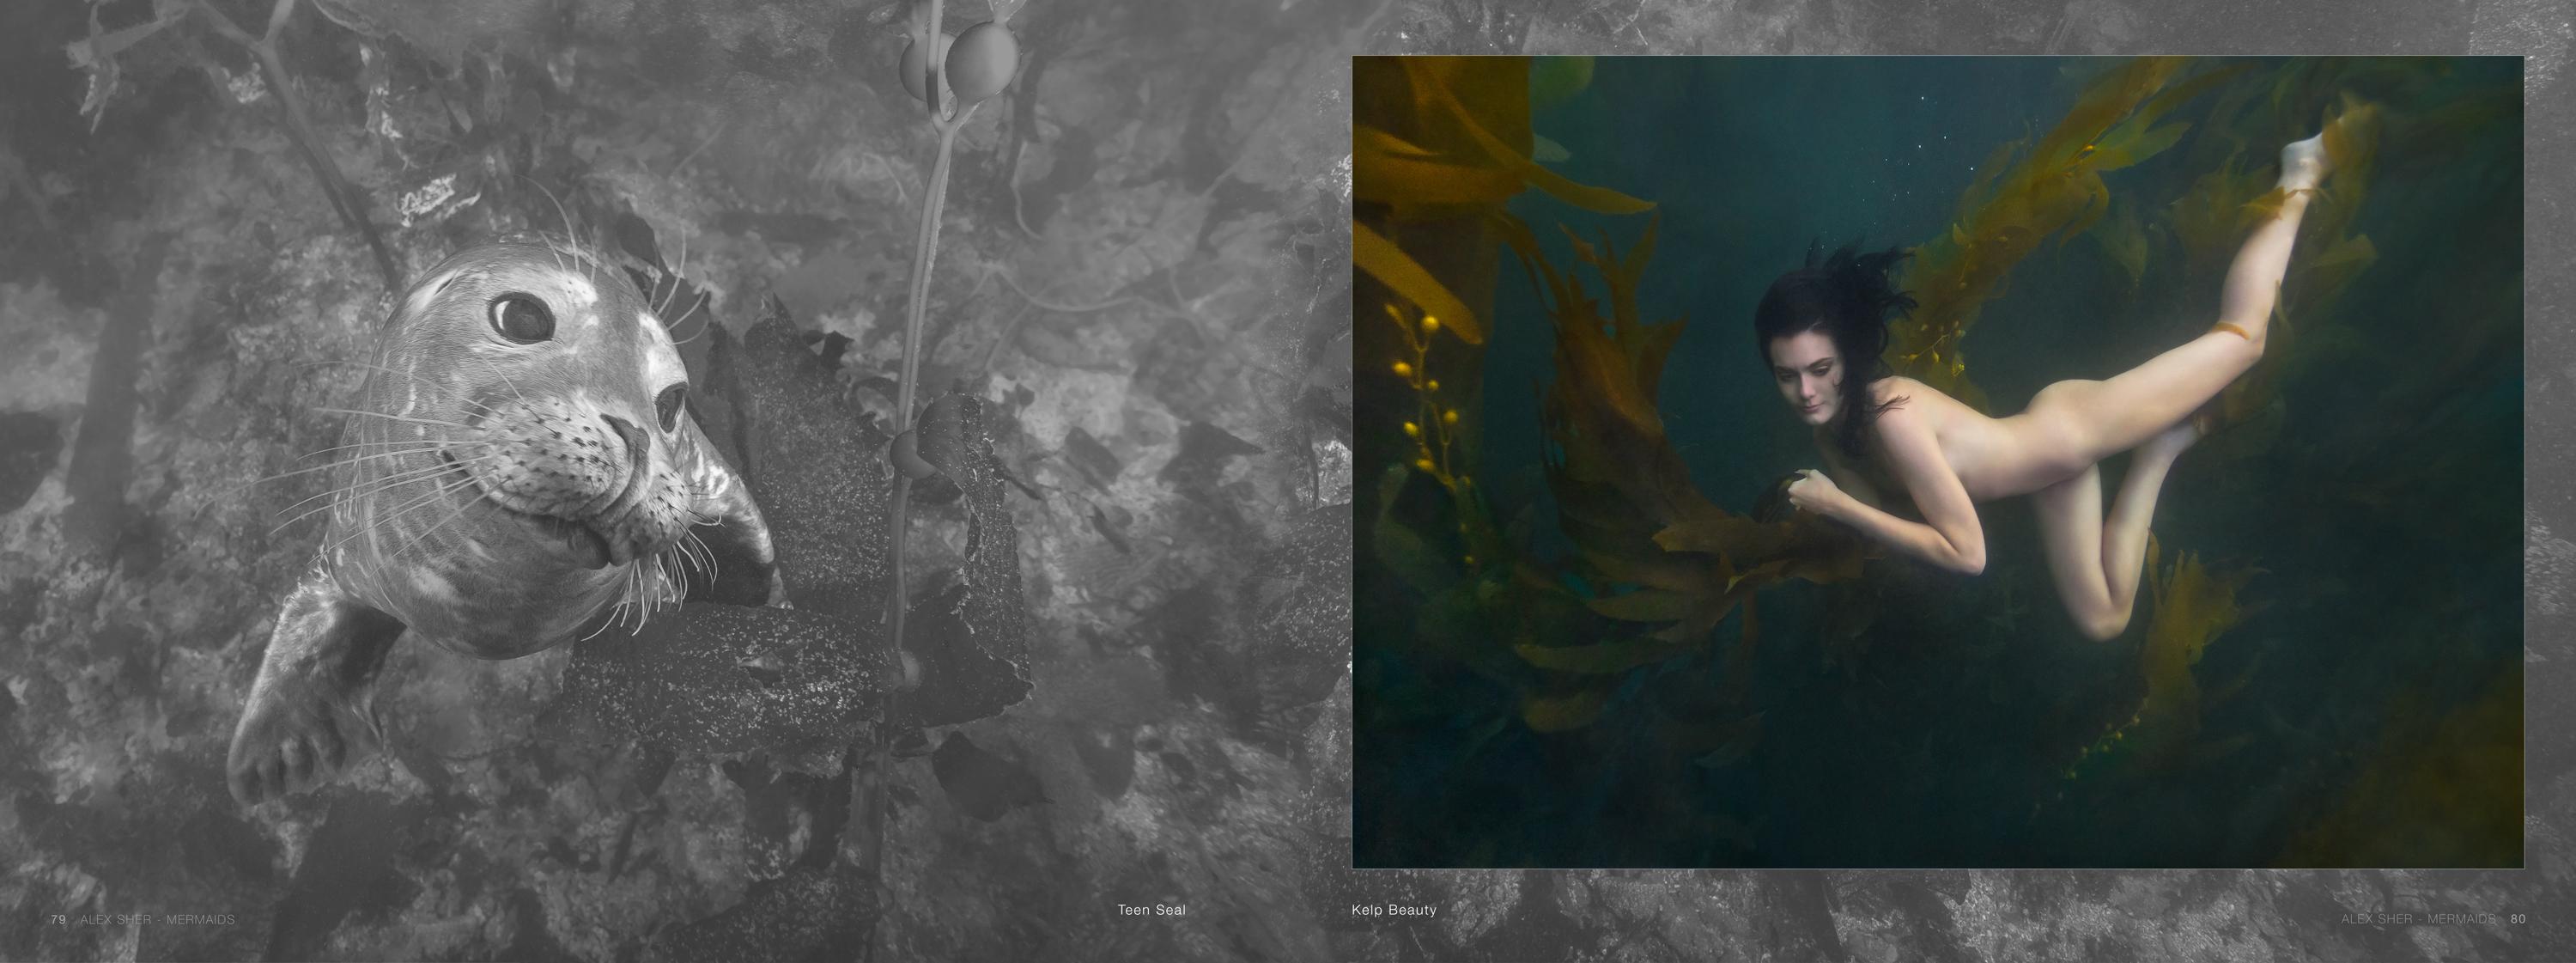 Mermaids -  a book of underwater nude and ocean wildlife photographs 15